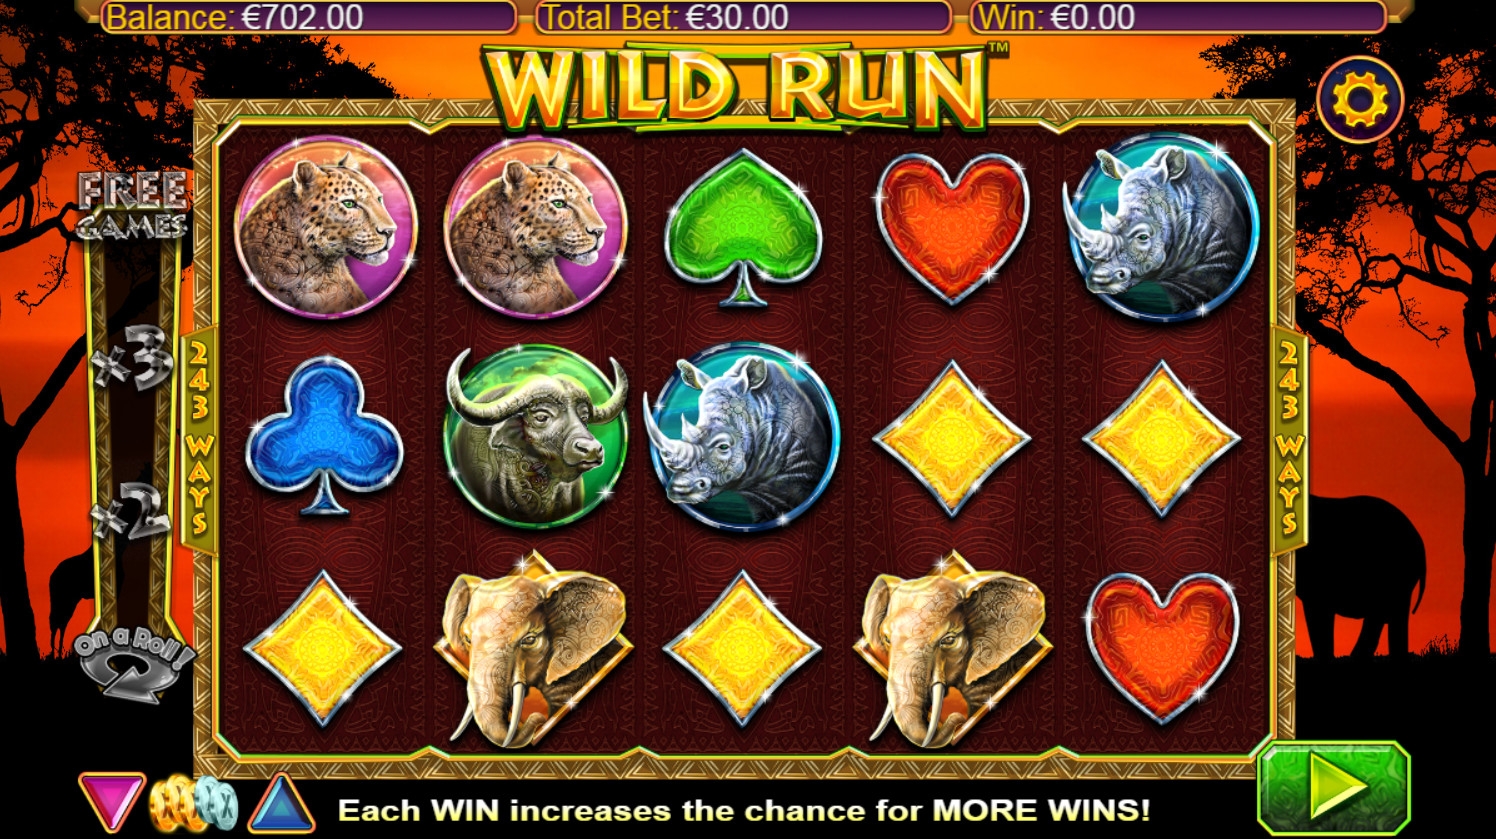 Wild Run (Wild Run) from category Slots